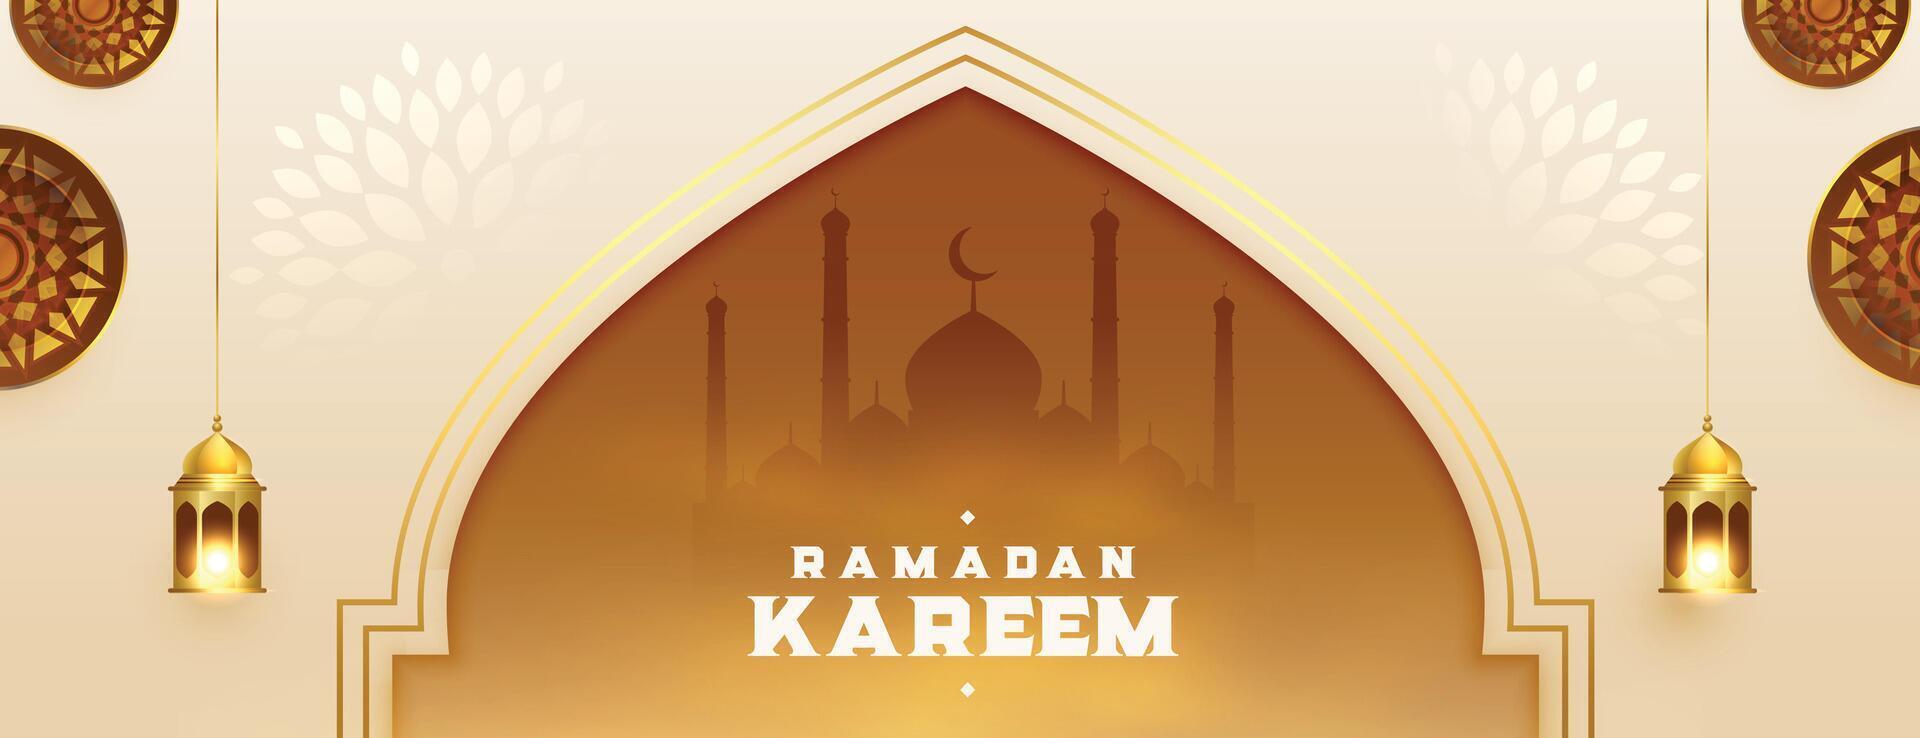 Arábica Ramadán kareem musulmán festival bandera diseño vector